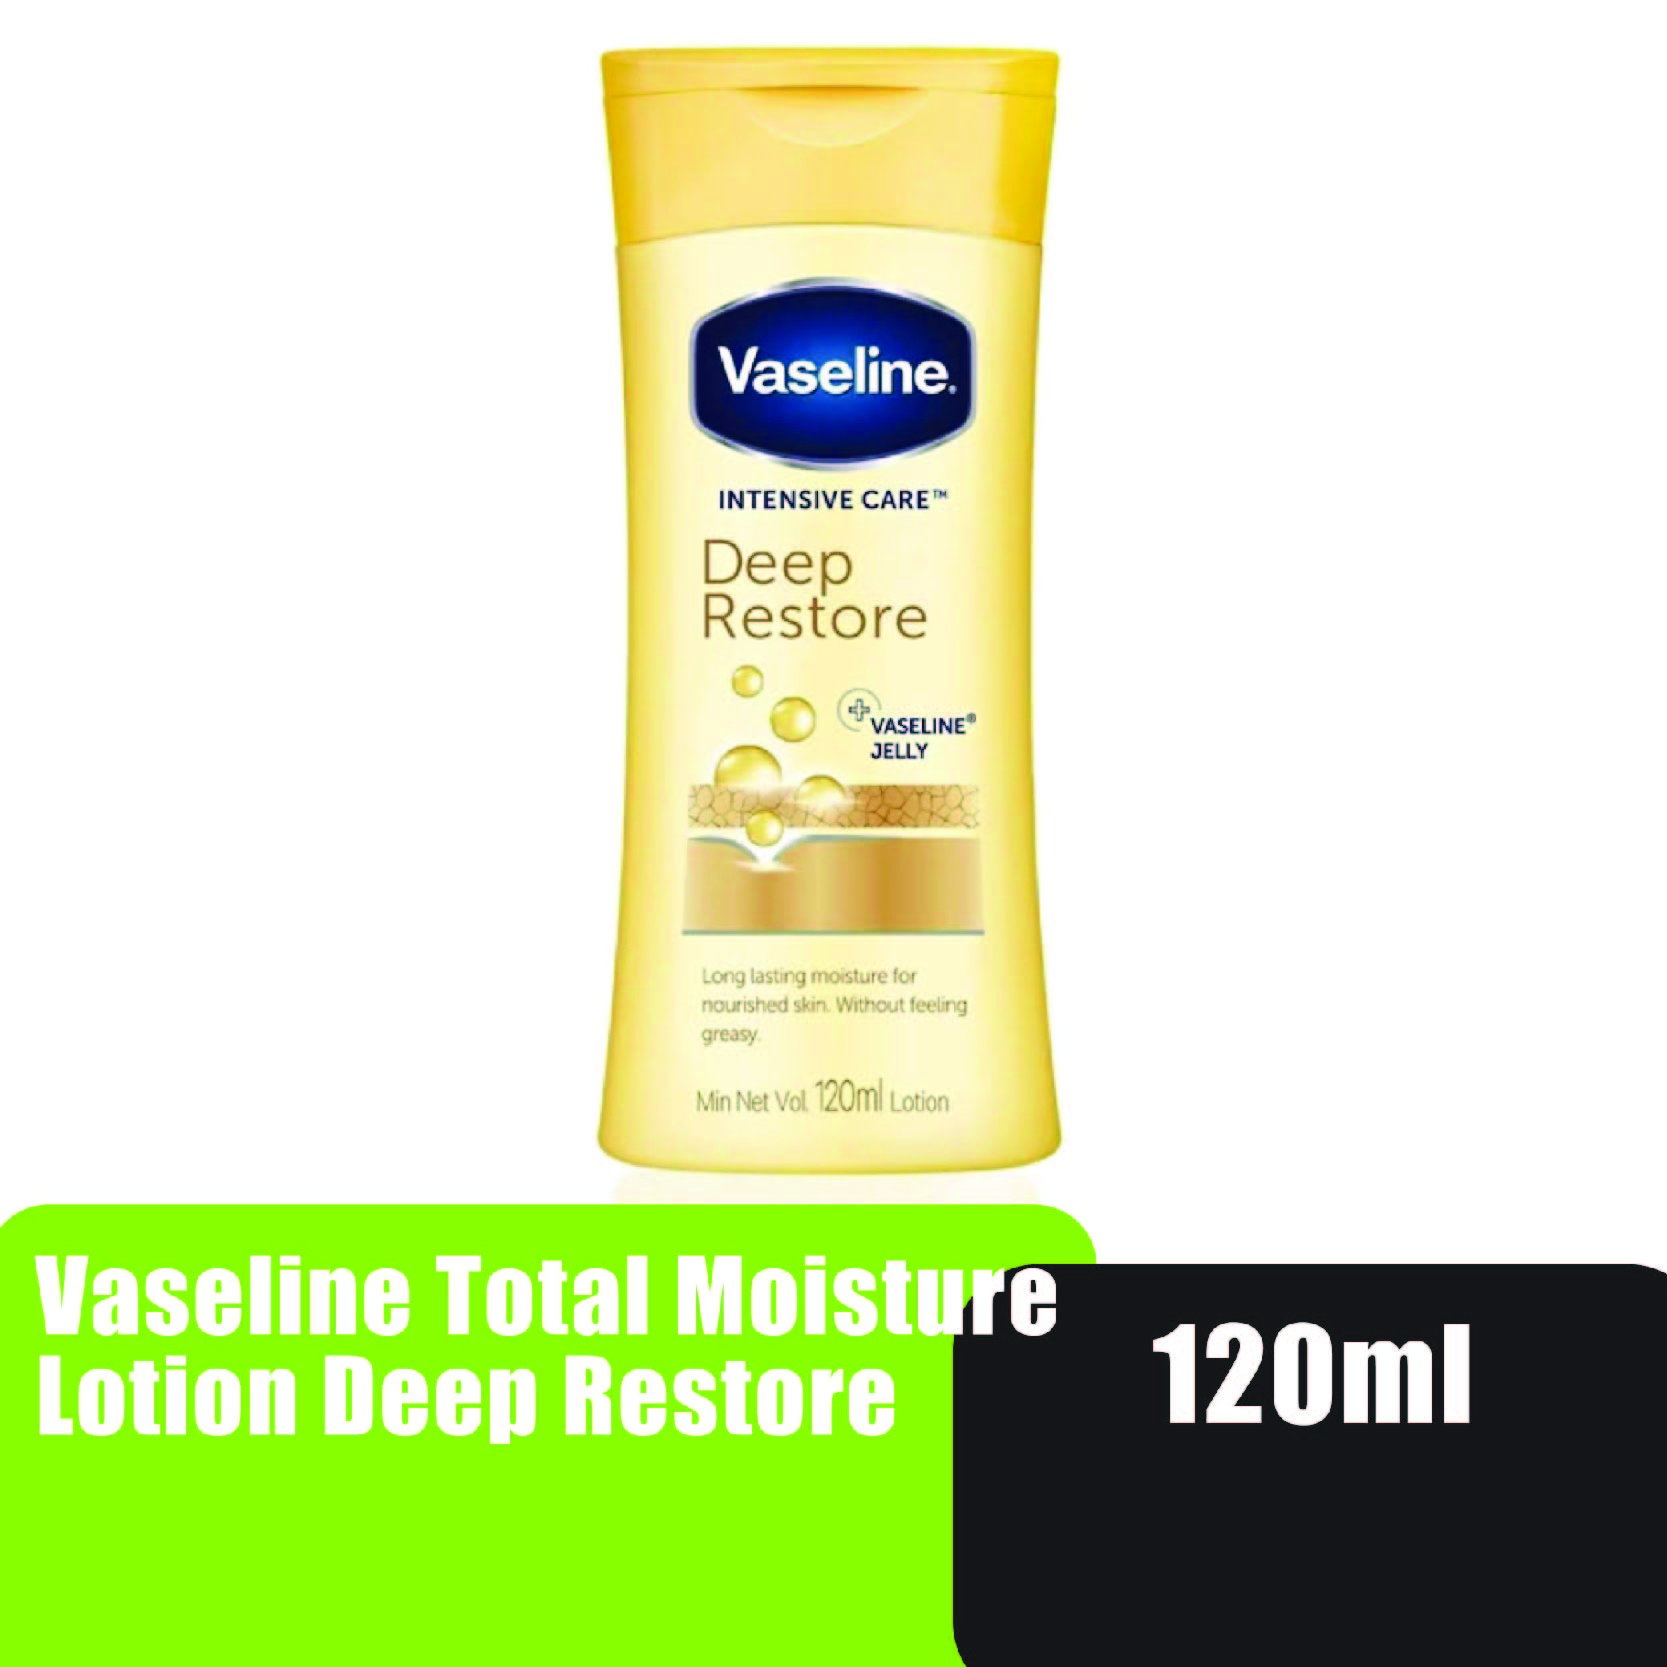 Vaseline Total Moisture Lotion 120ml - Deep Restore